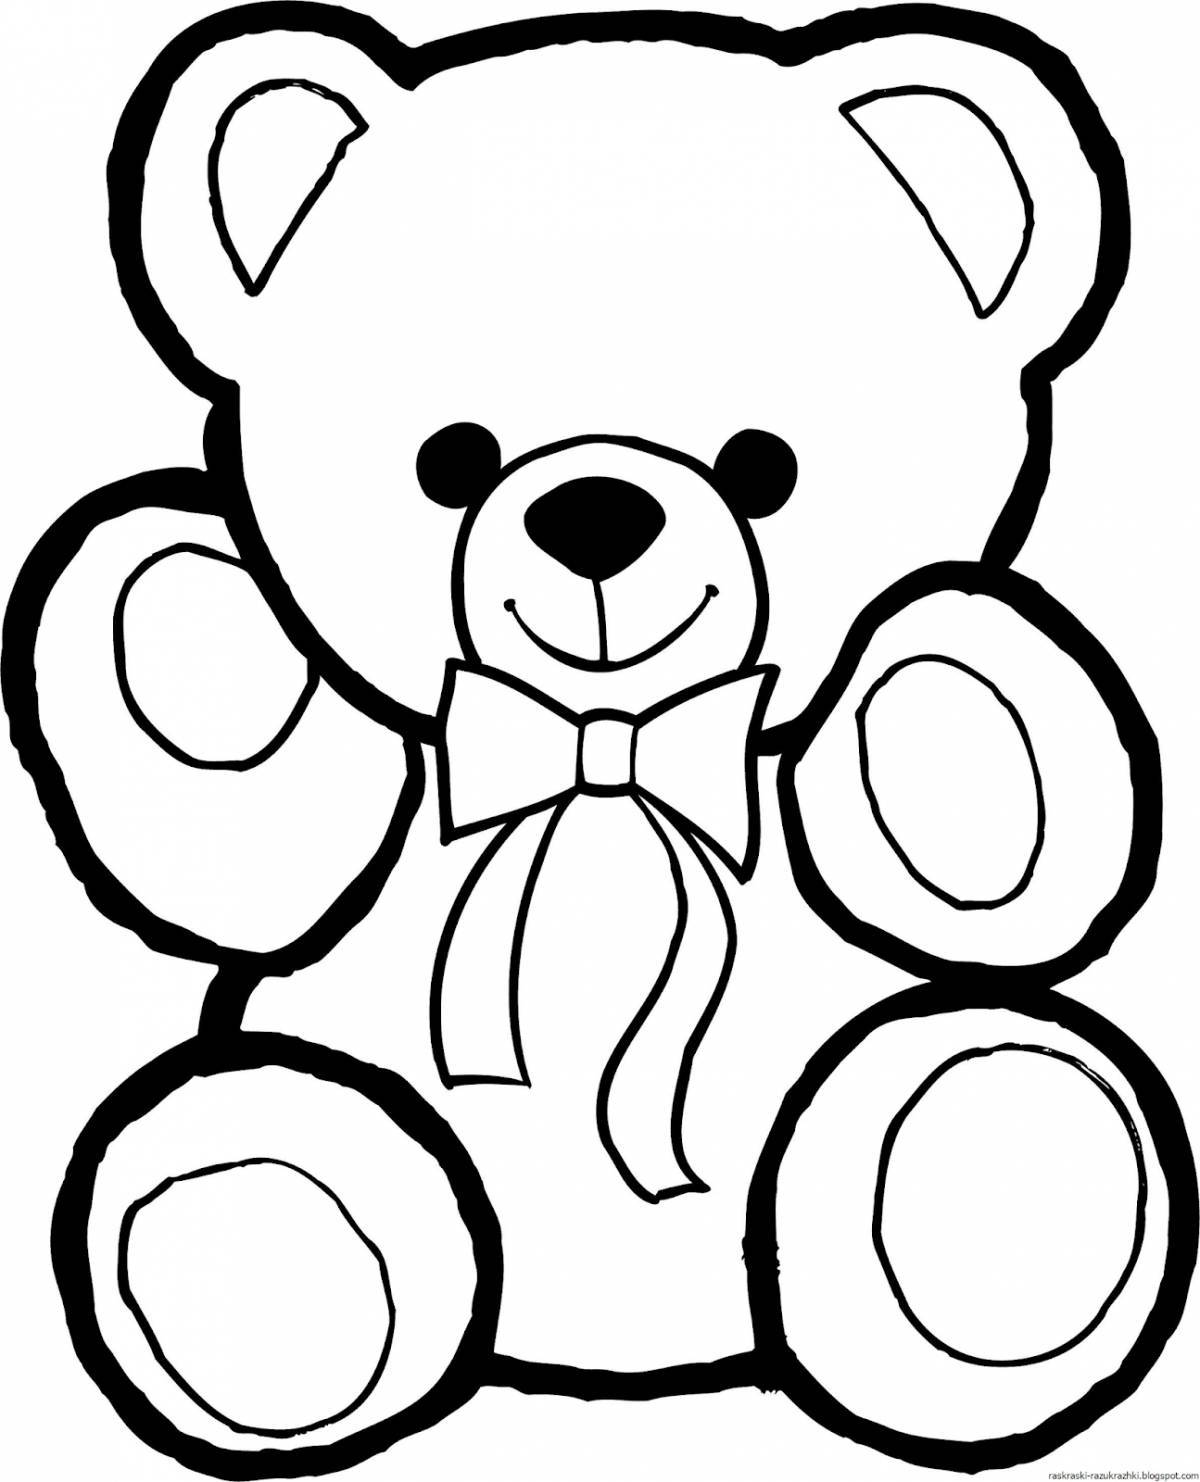 Teddy bear waving coloring page